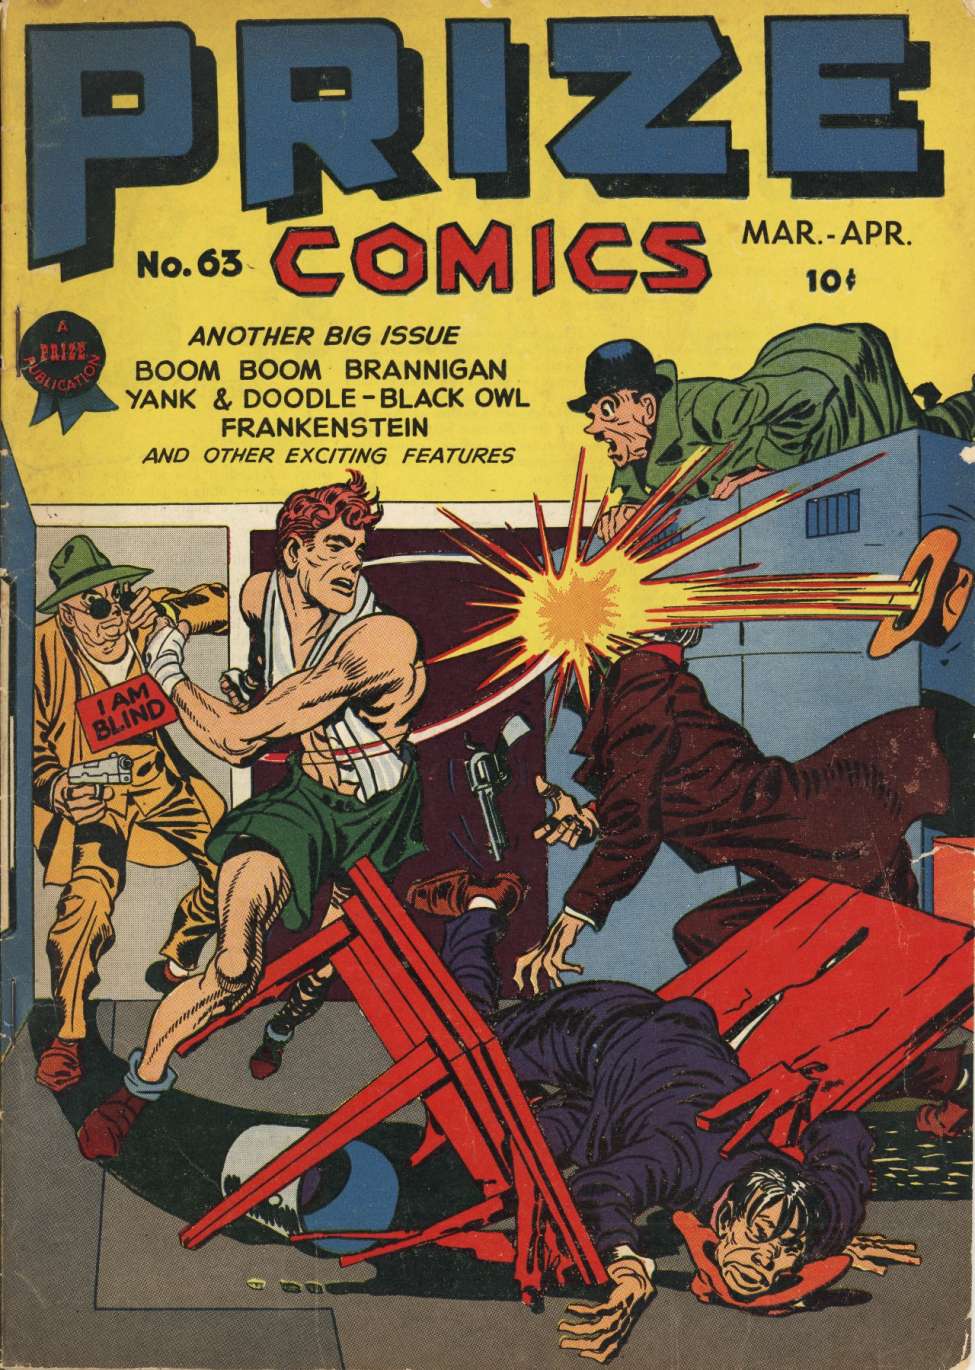 Book Cover For Prize Comics 63 (alt) - Version 2